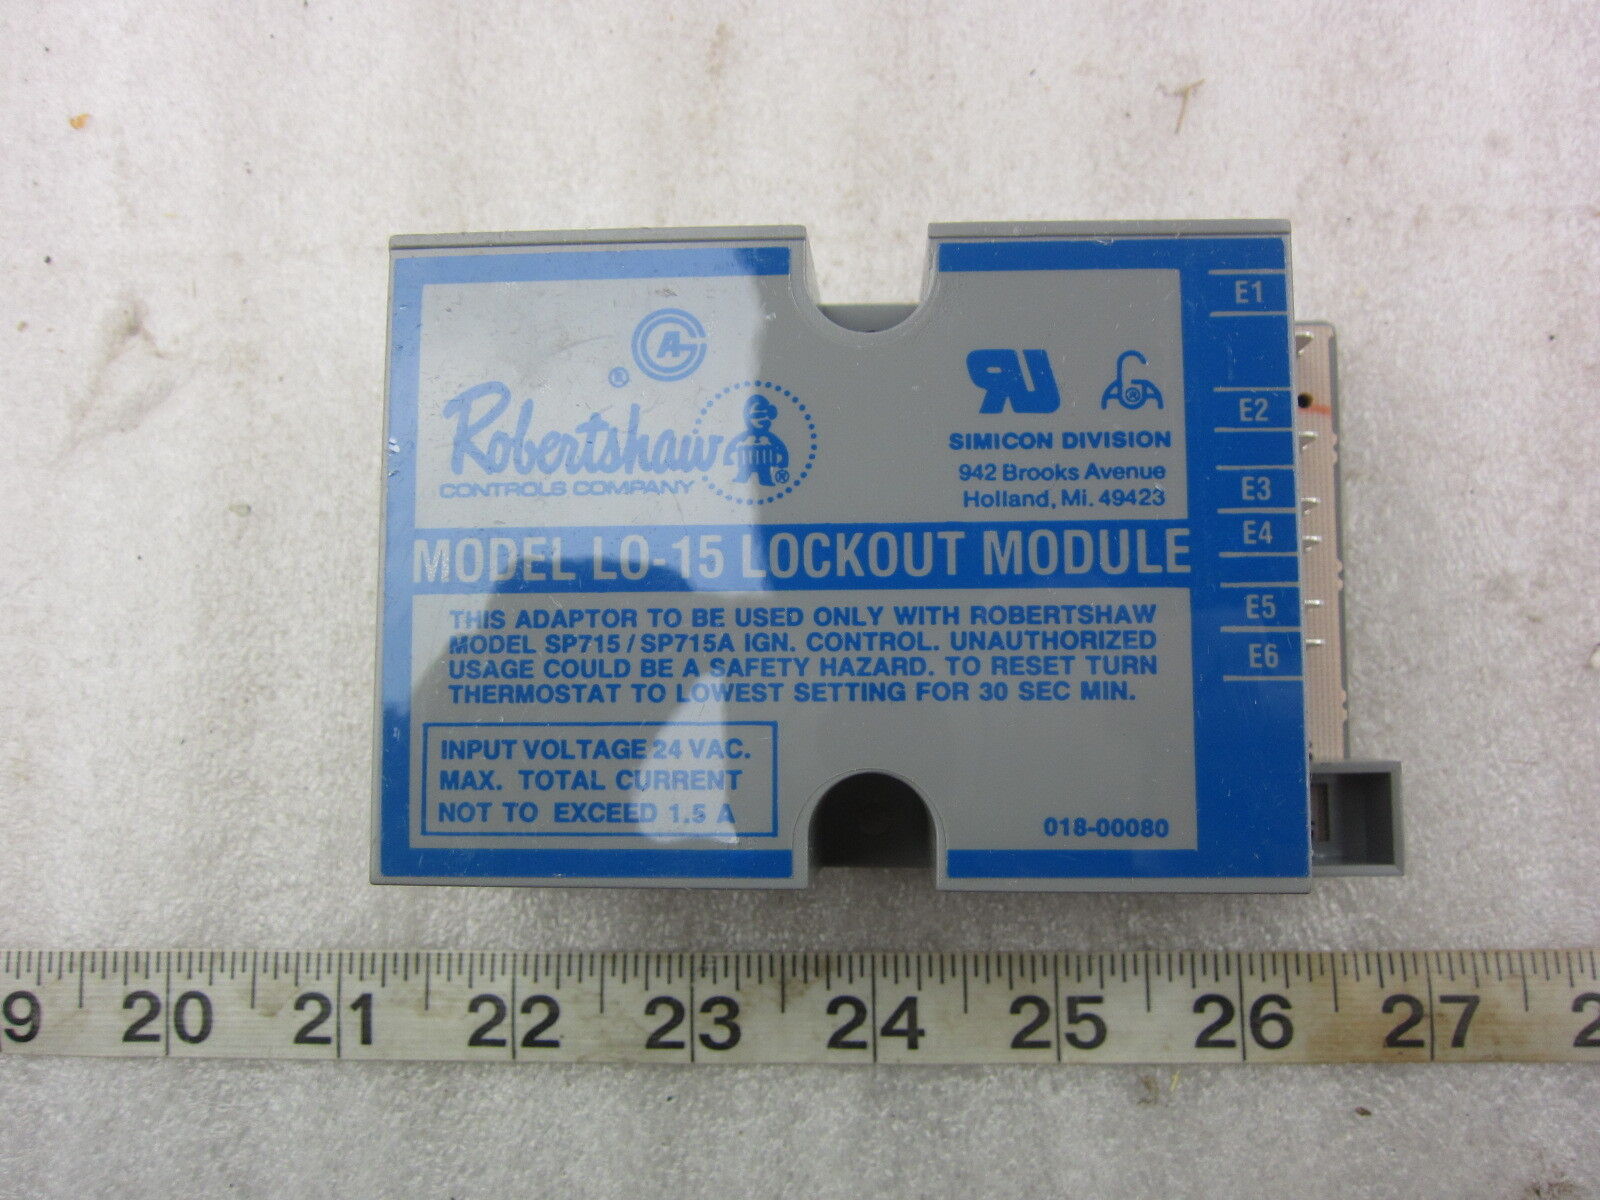 Robertshaw LO-15 B13707-21 62-21940-01 Lock-Out Module, New